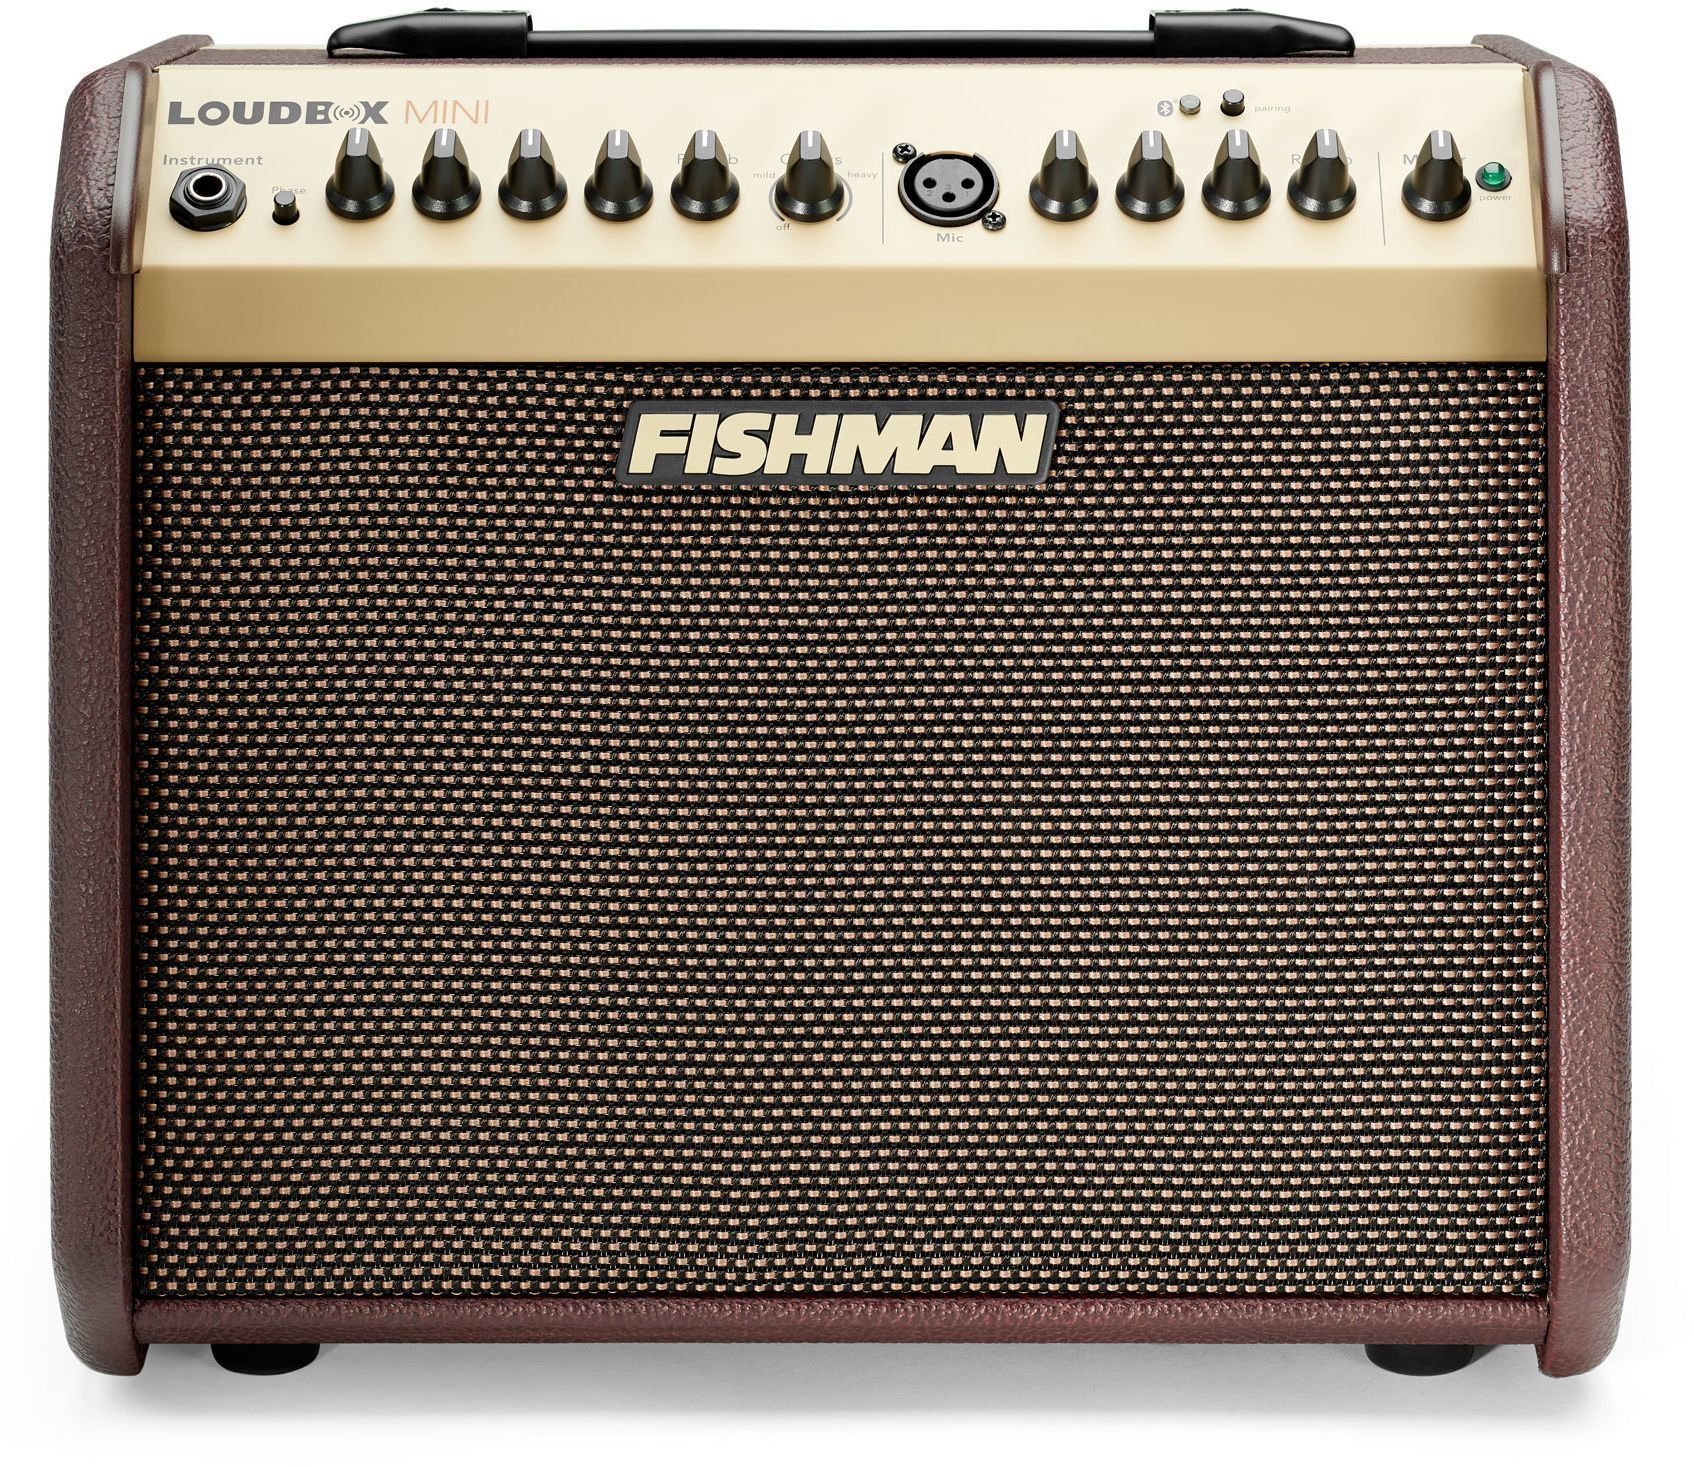 Combo elektroakustiselle kitaralle Fishman Loudbox Mini